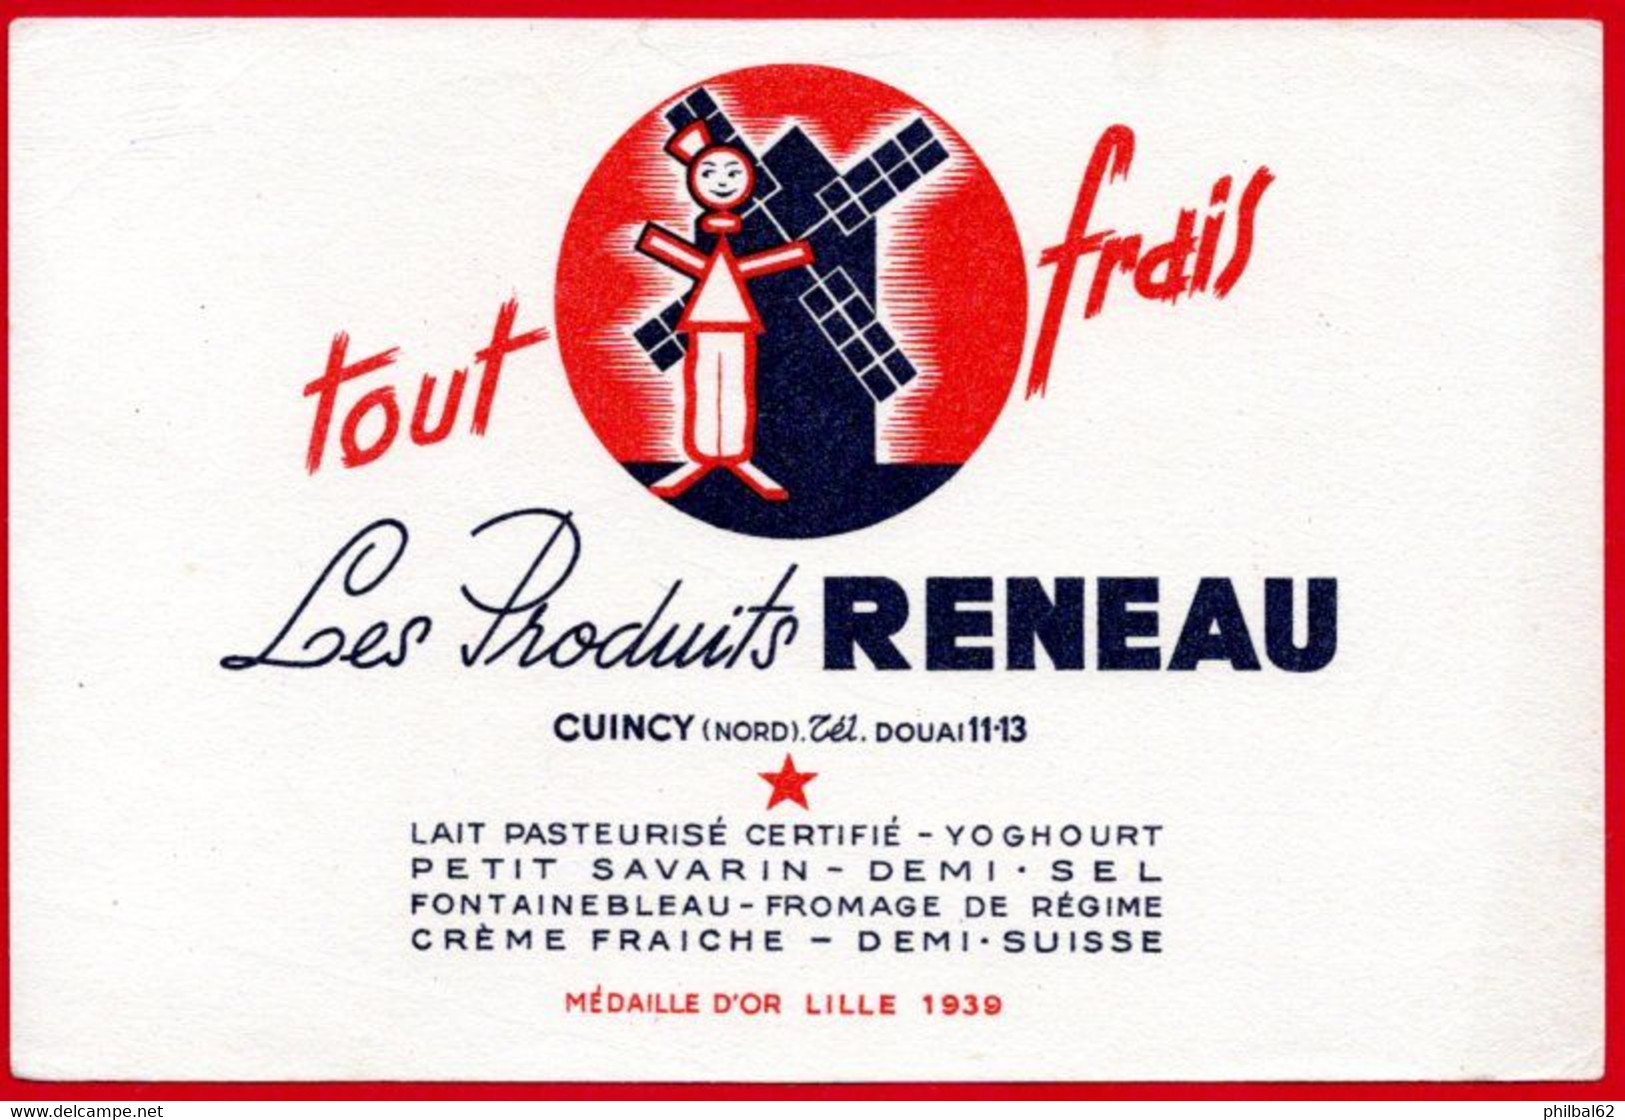 Buvard Produits Reneau, Cuincy, Nord. - Leche